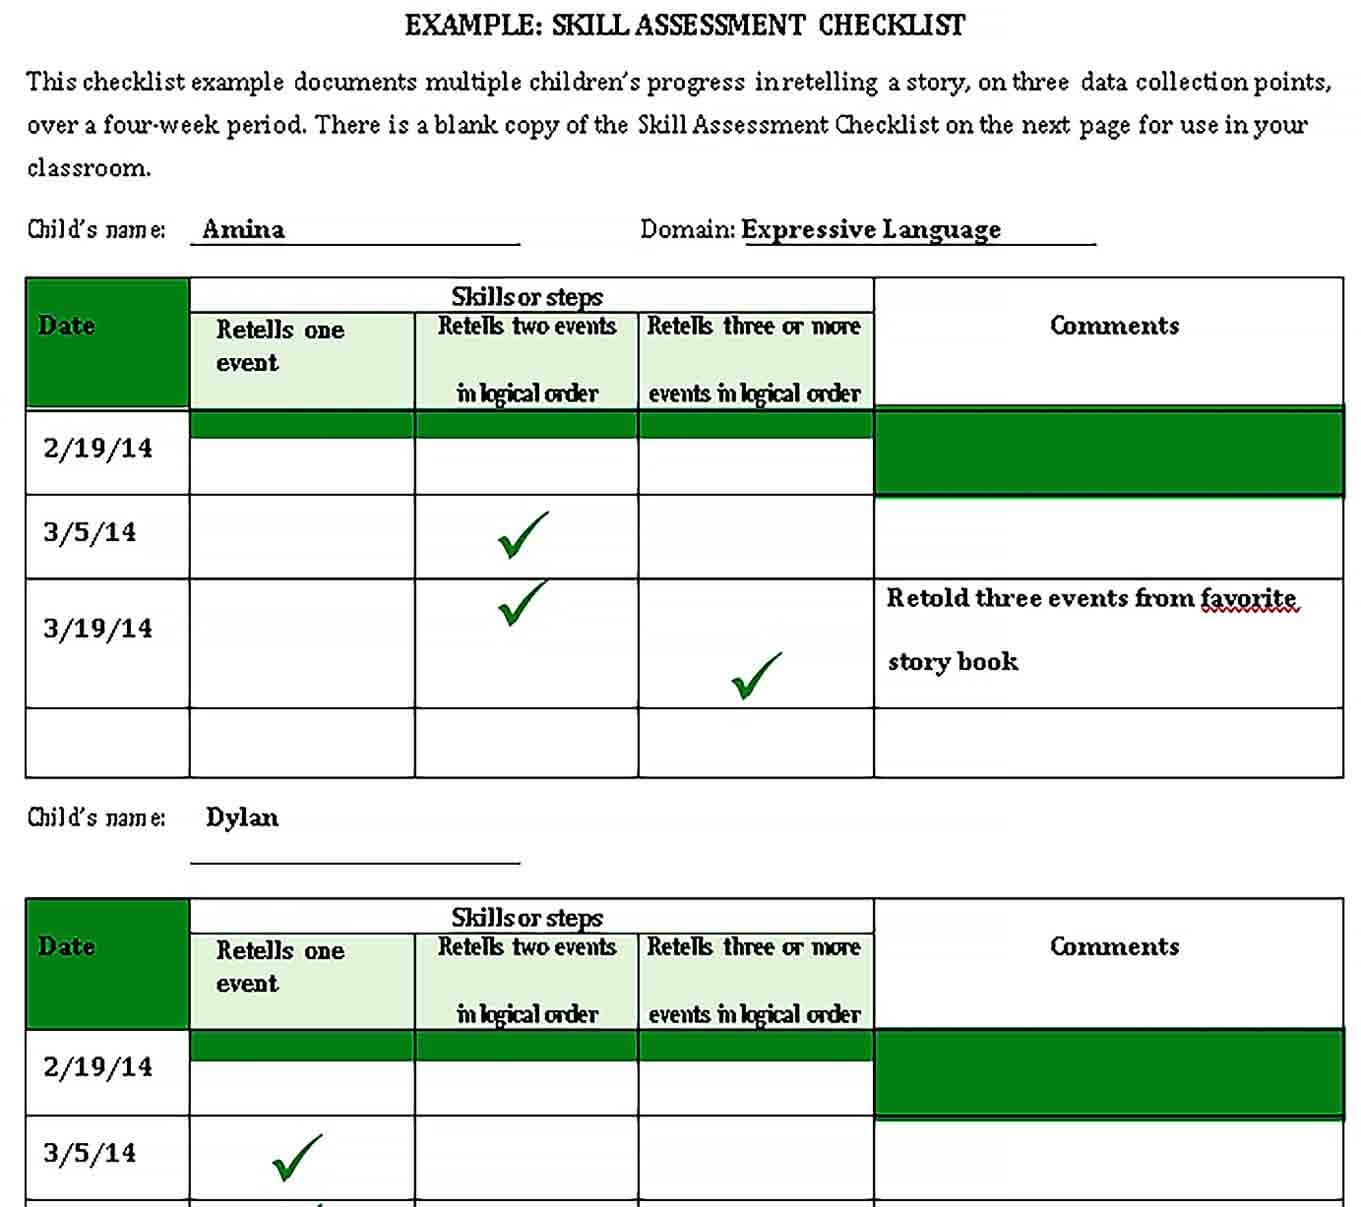 Sample checklist teacher tools skill